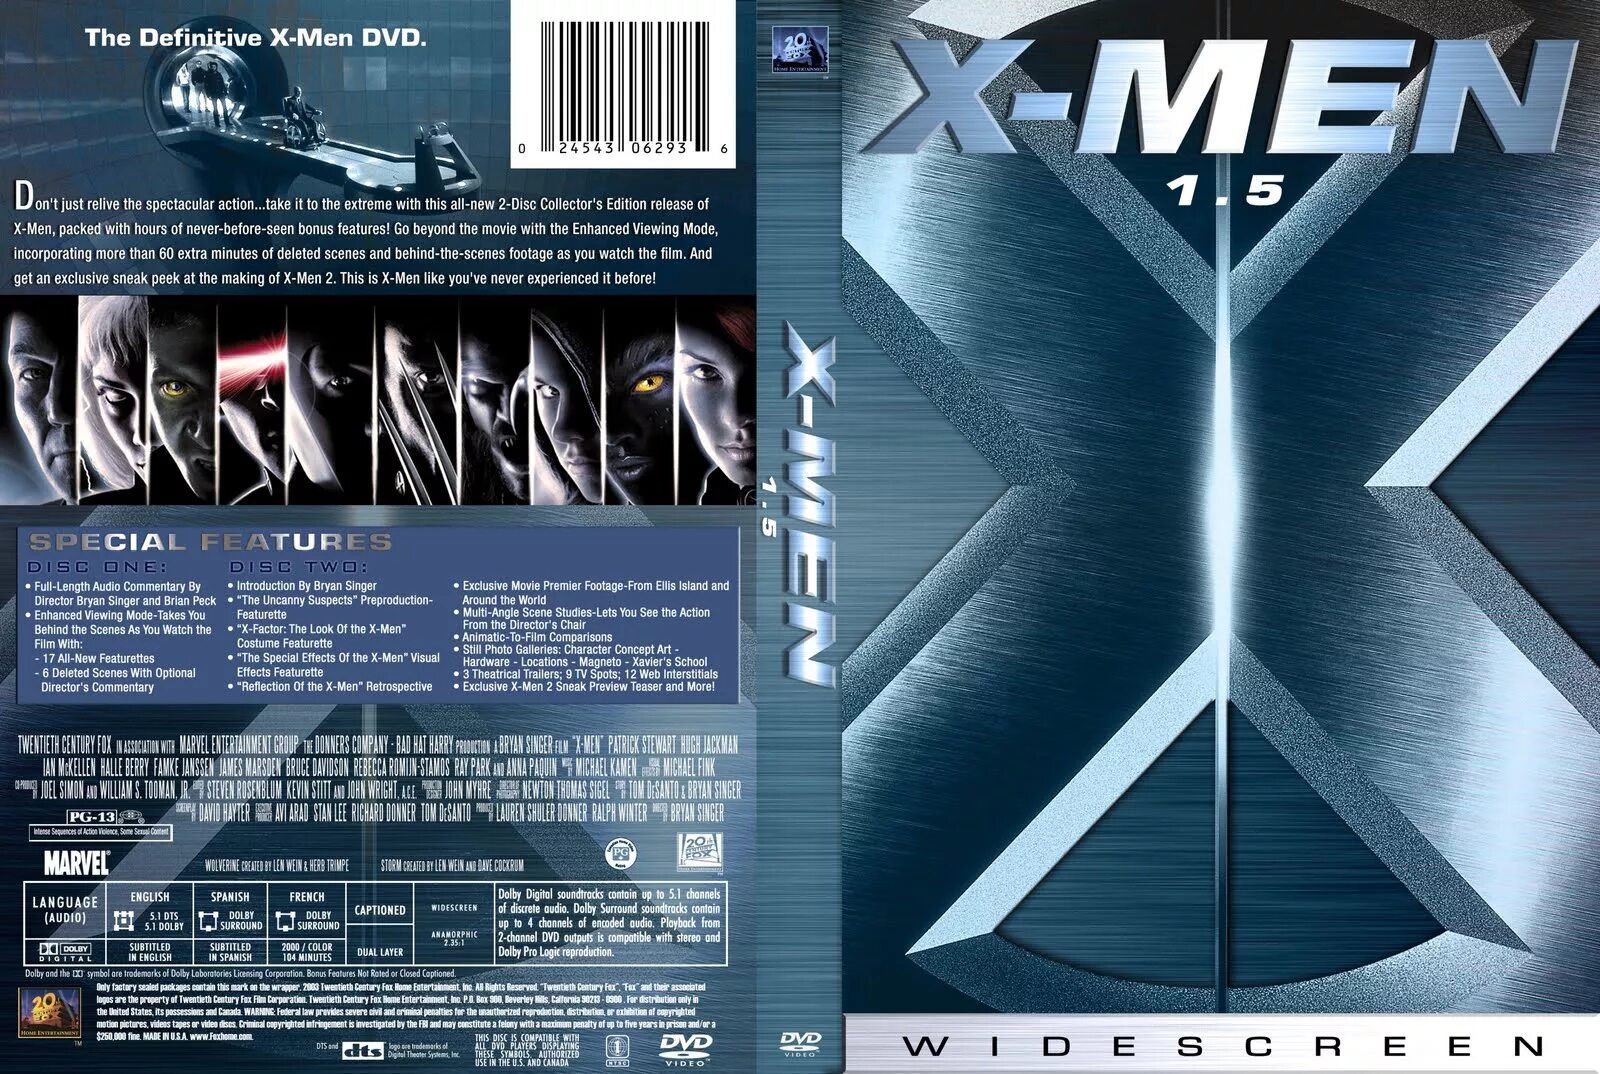 X-men 2000 DVD Cover. Люди Икс 2000 DVD Cover. X-men DVD Cover. X men VHS 2000.